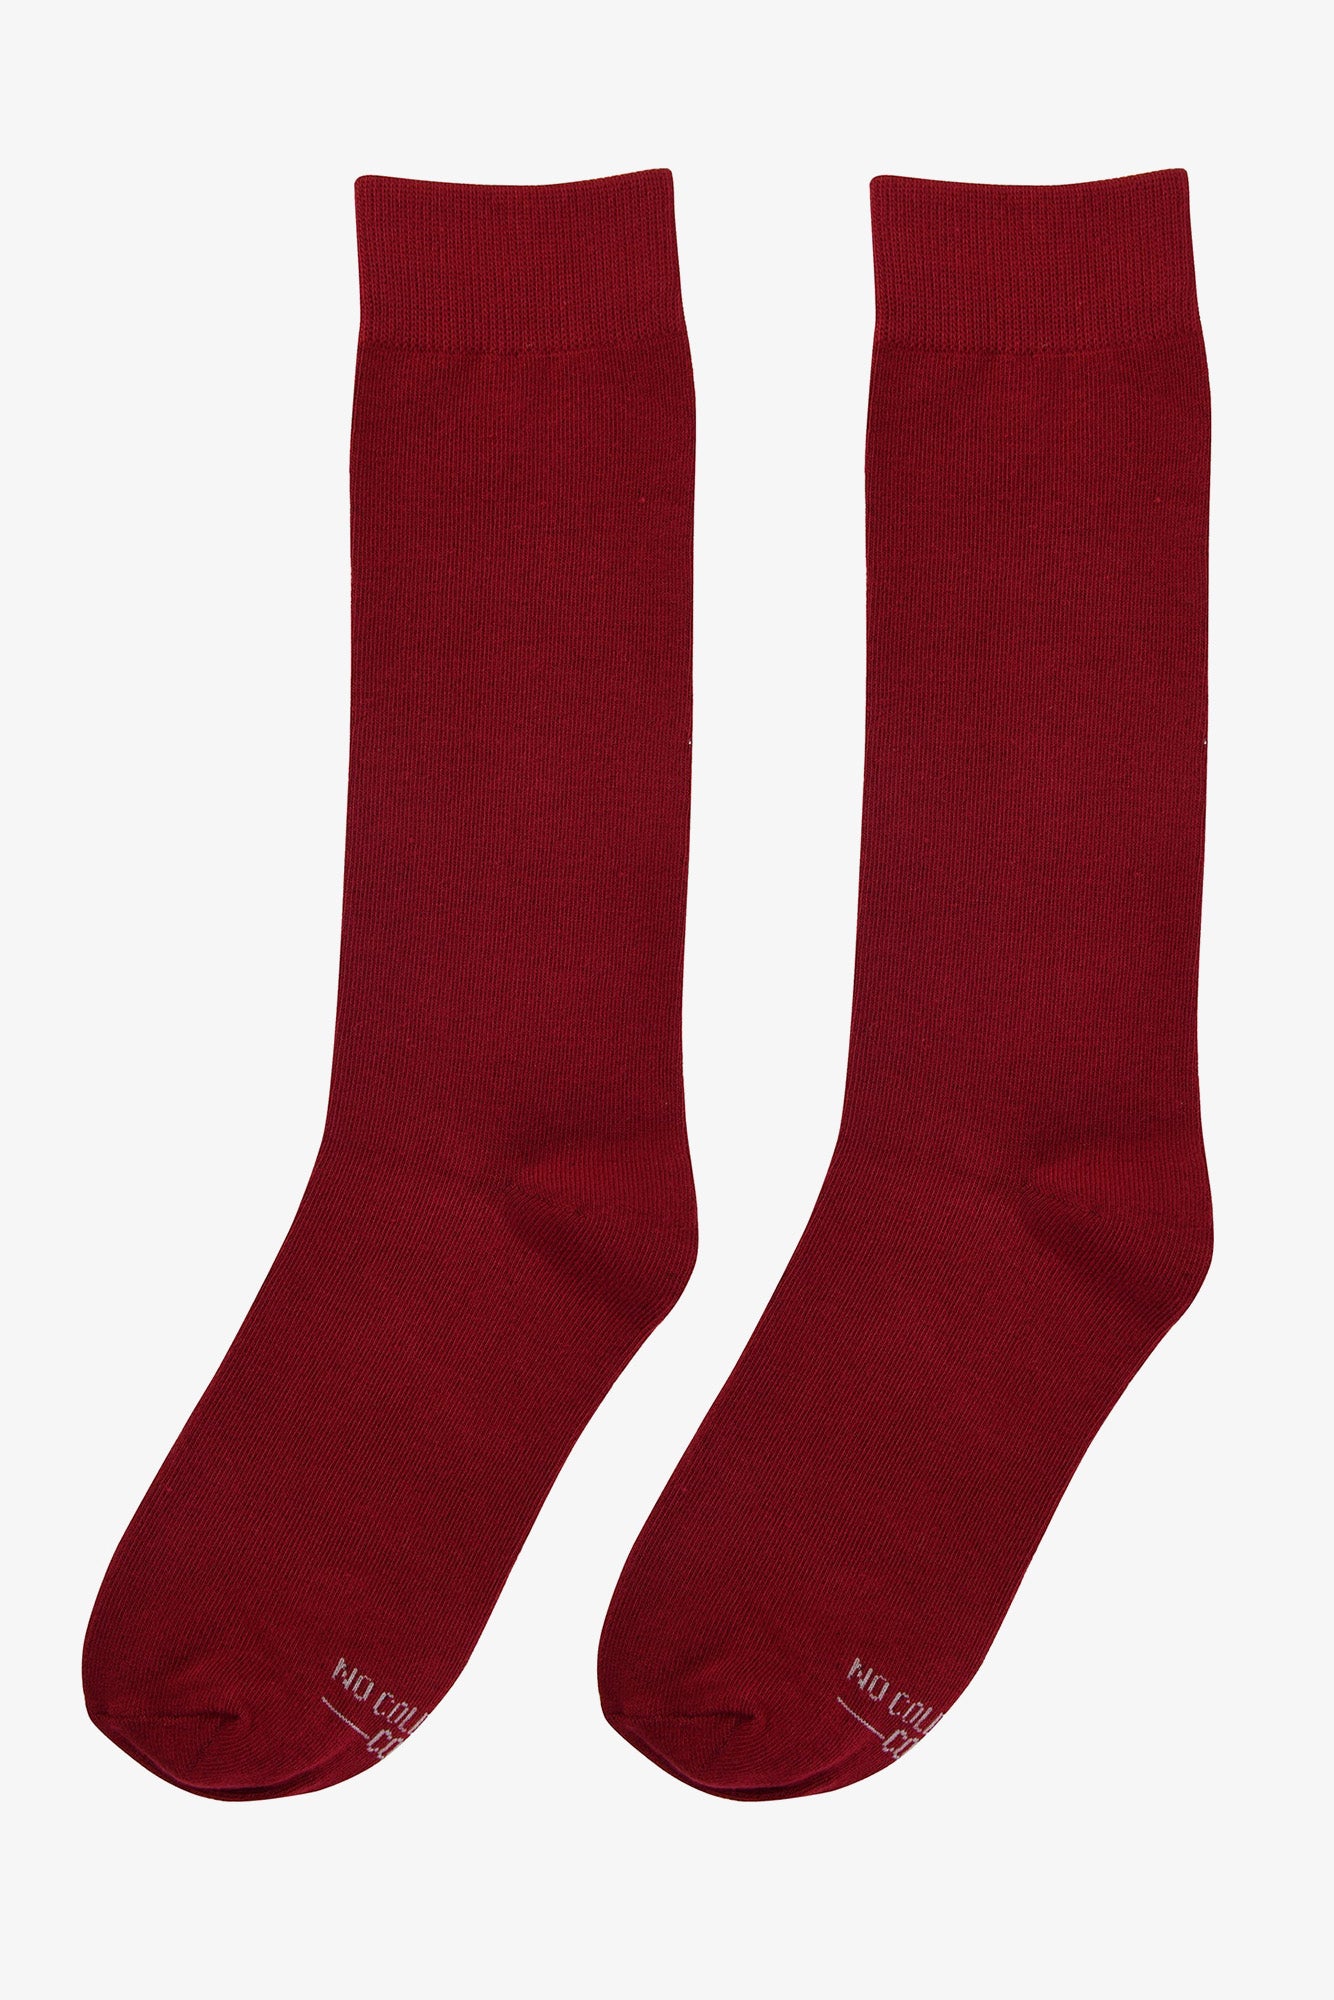 Solid Burgundy Groomsmen Socks by No Cold Feet